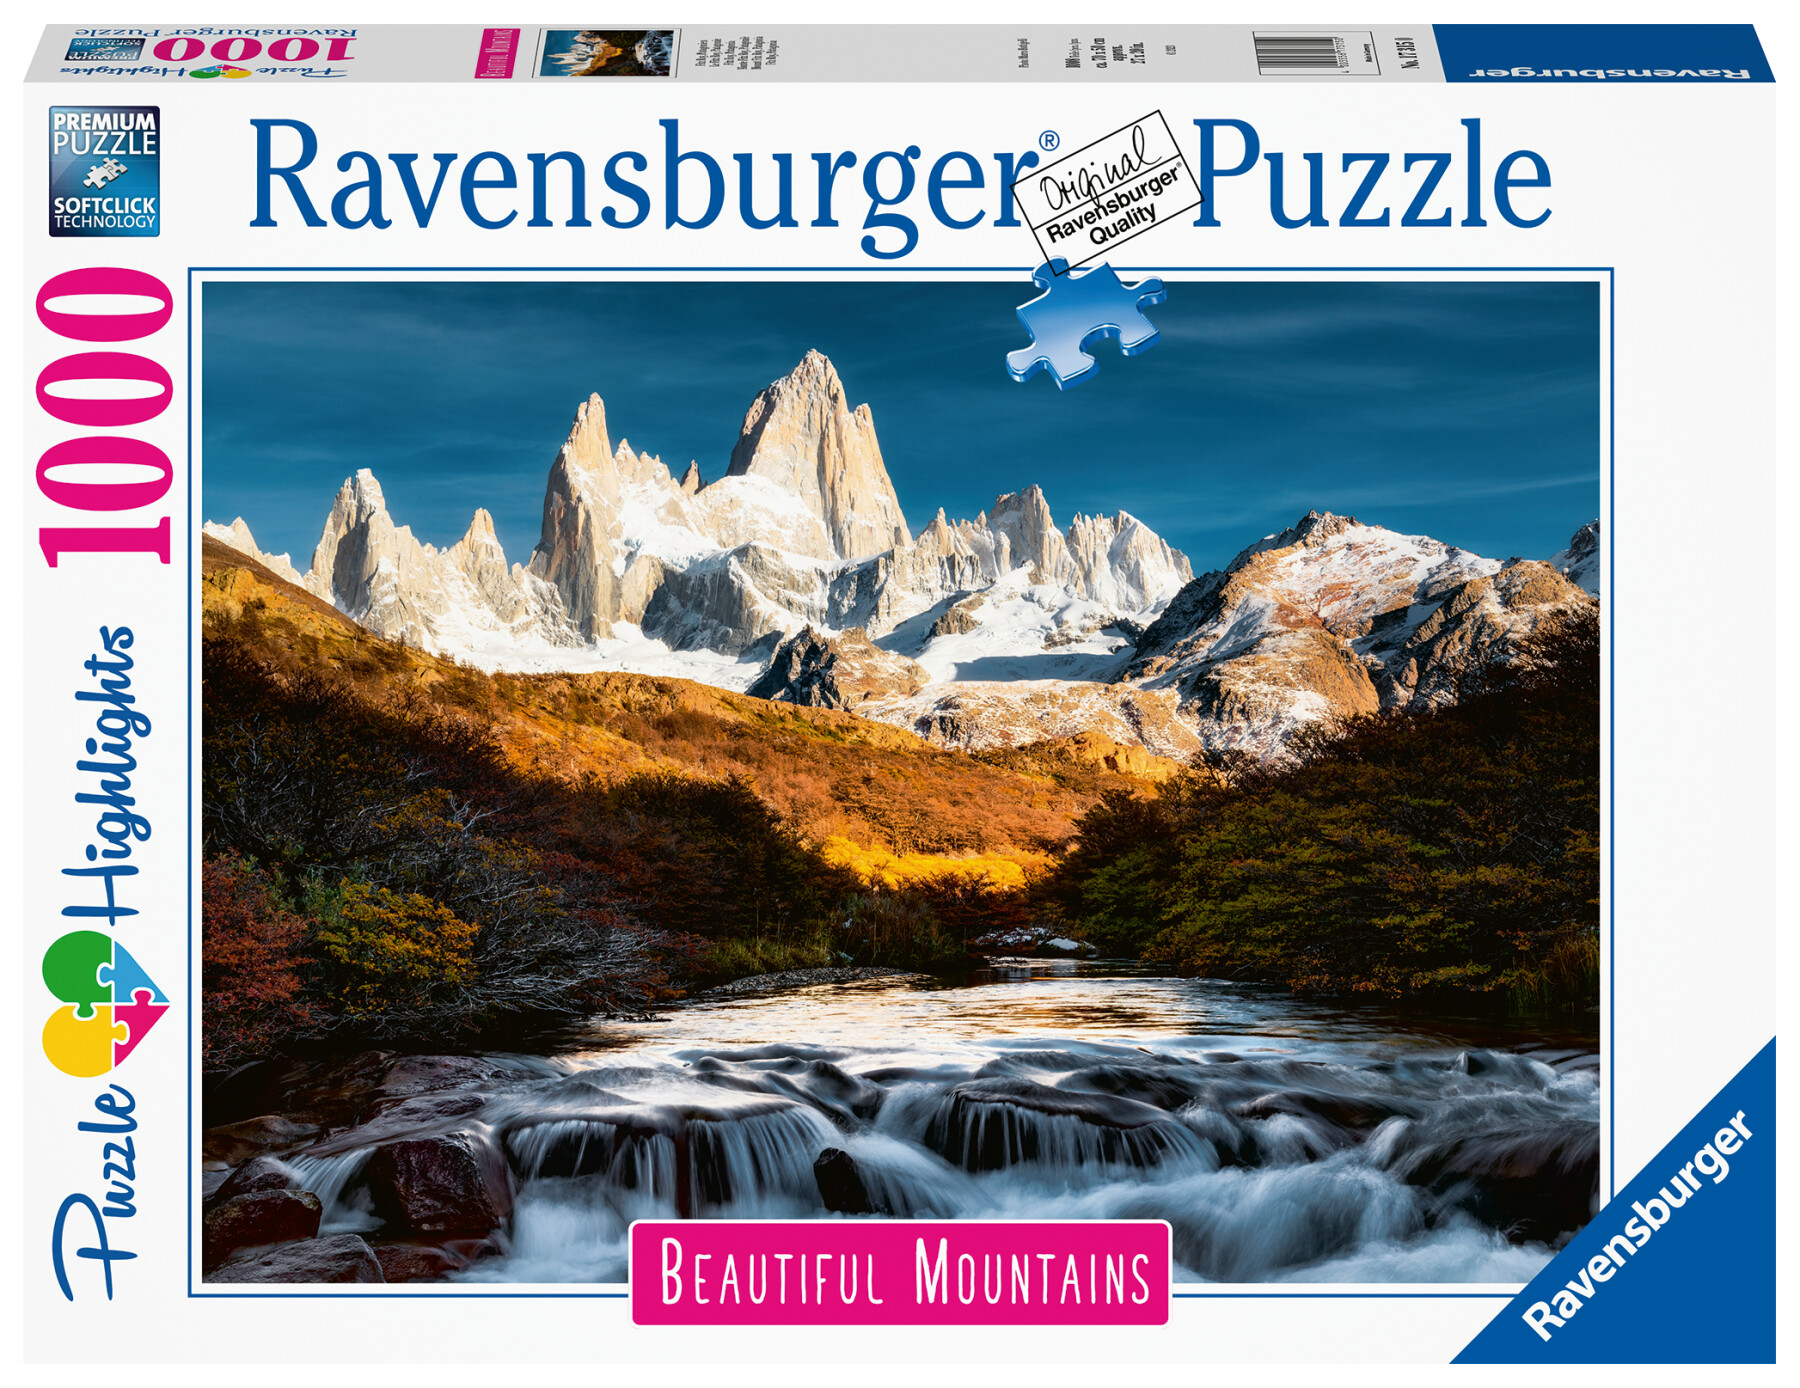 Ravensburger - puzzle fitz roy, patagonia, collezione beautiful mountains, 1000 pezzi, puzzle adulti - RAVENSBURGER